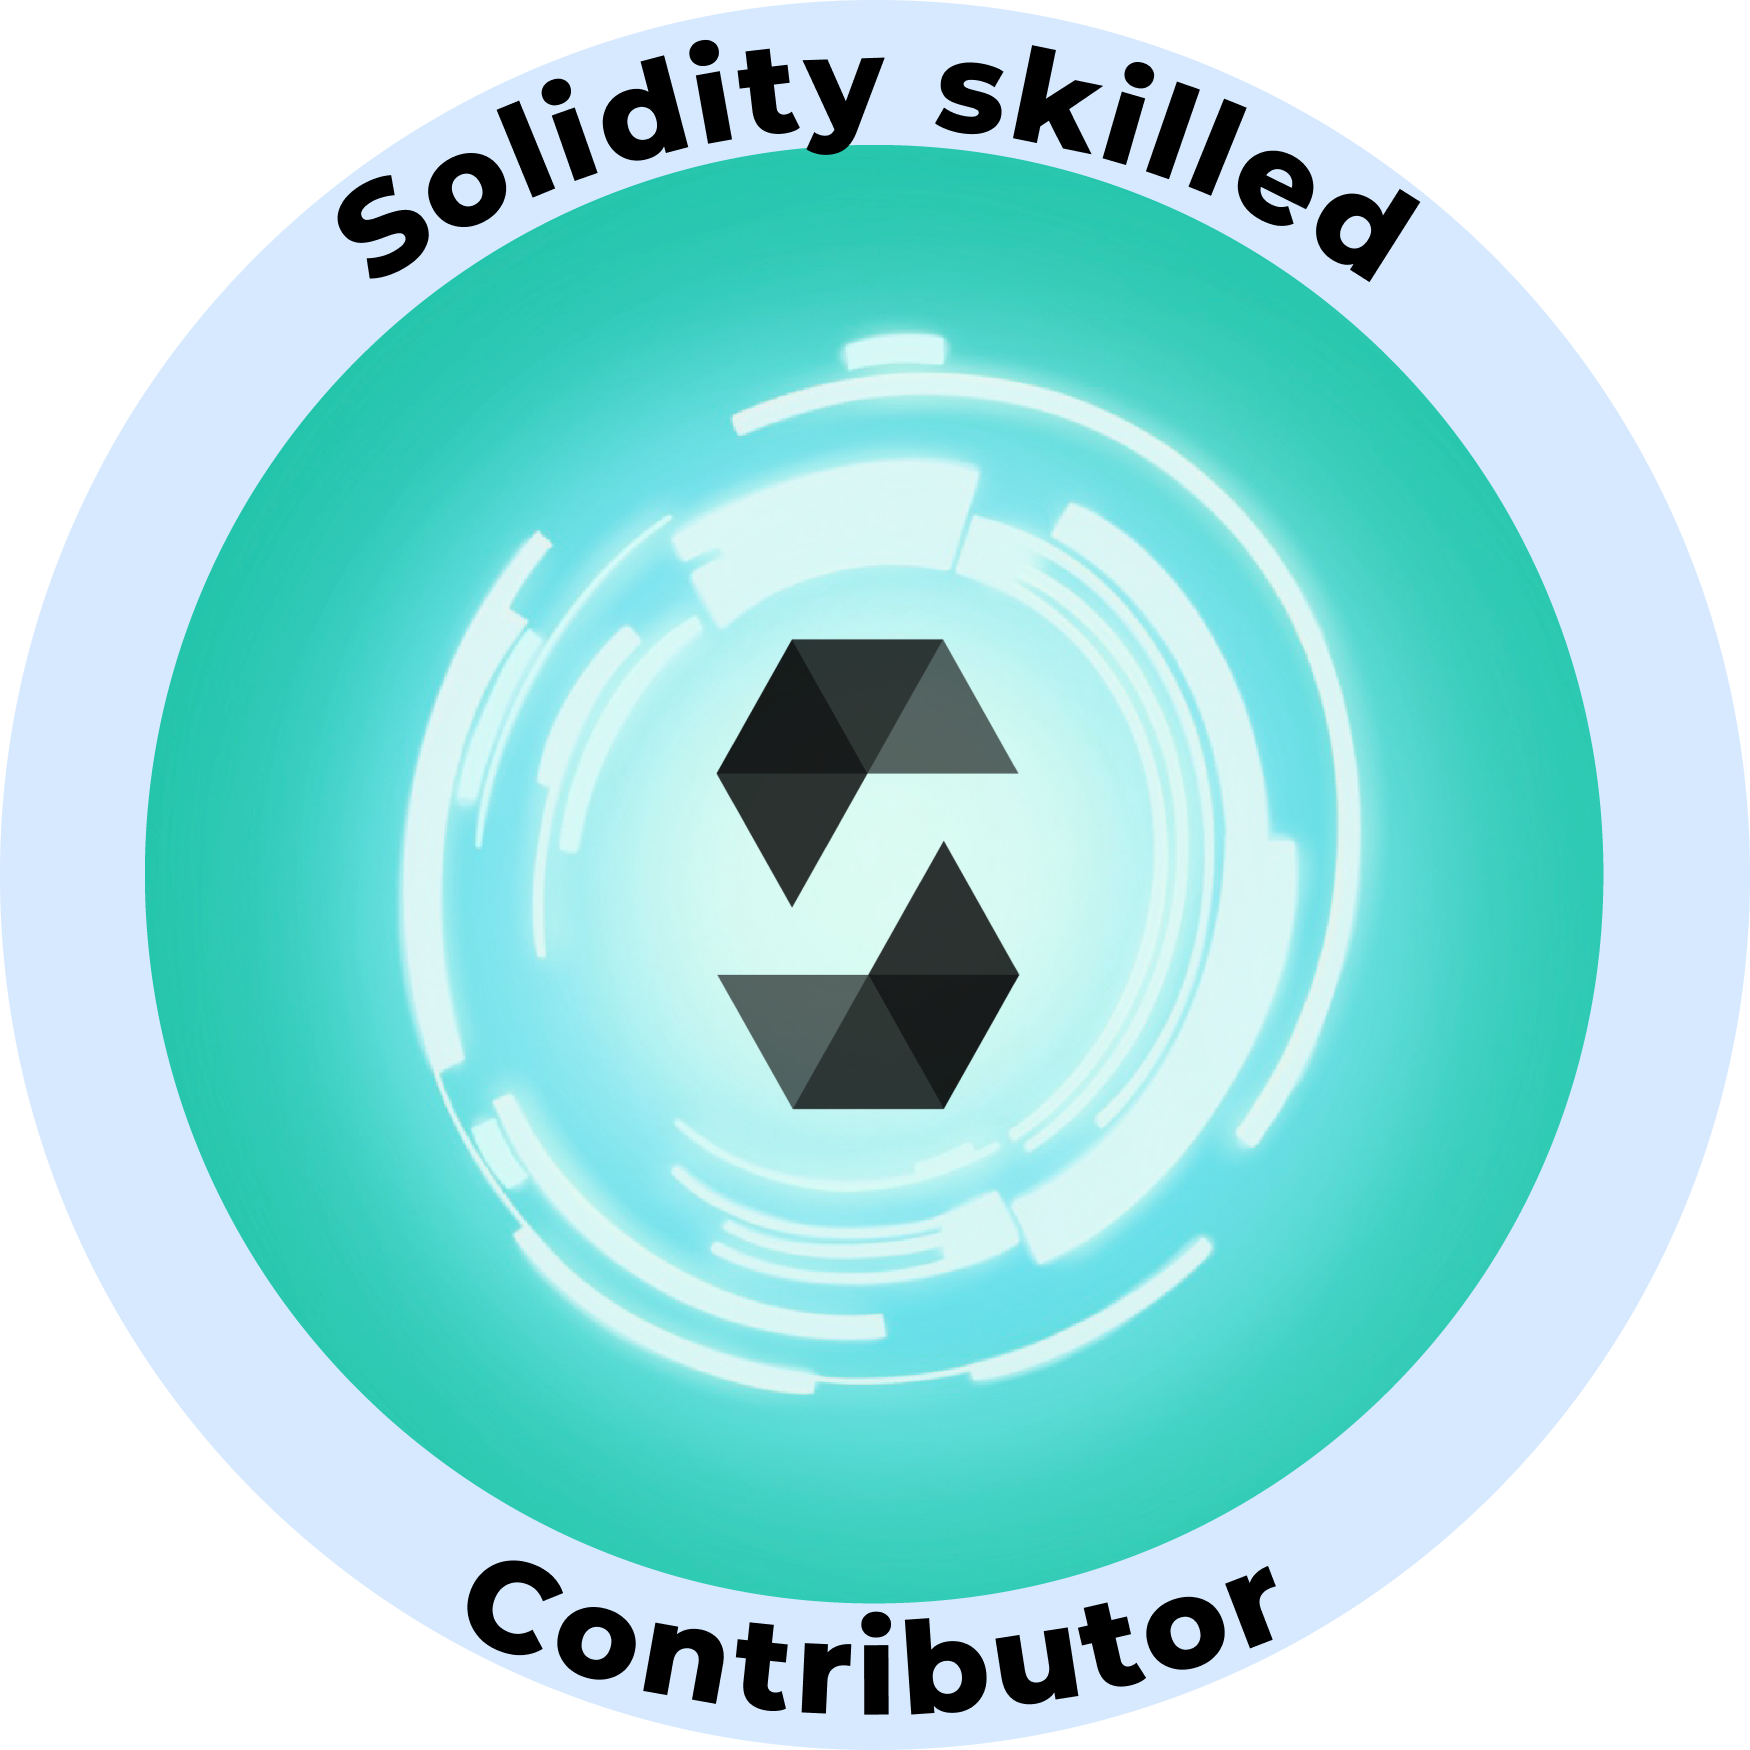 Web3 Badge | Solidity Skilled Contributor logo